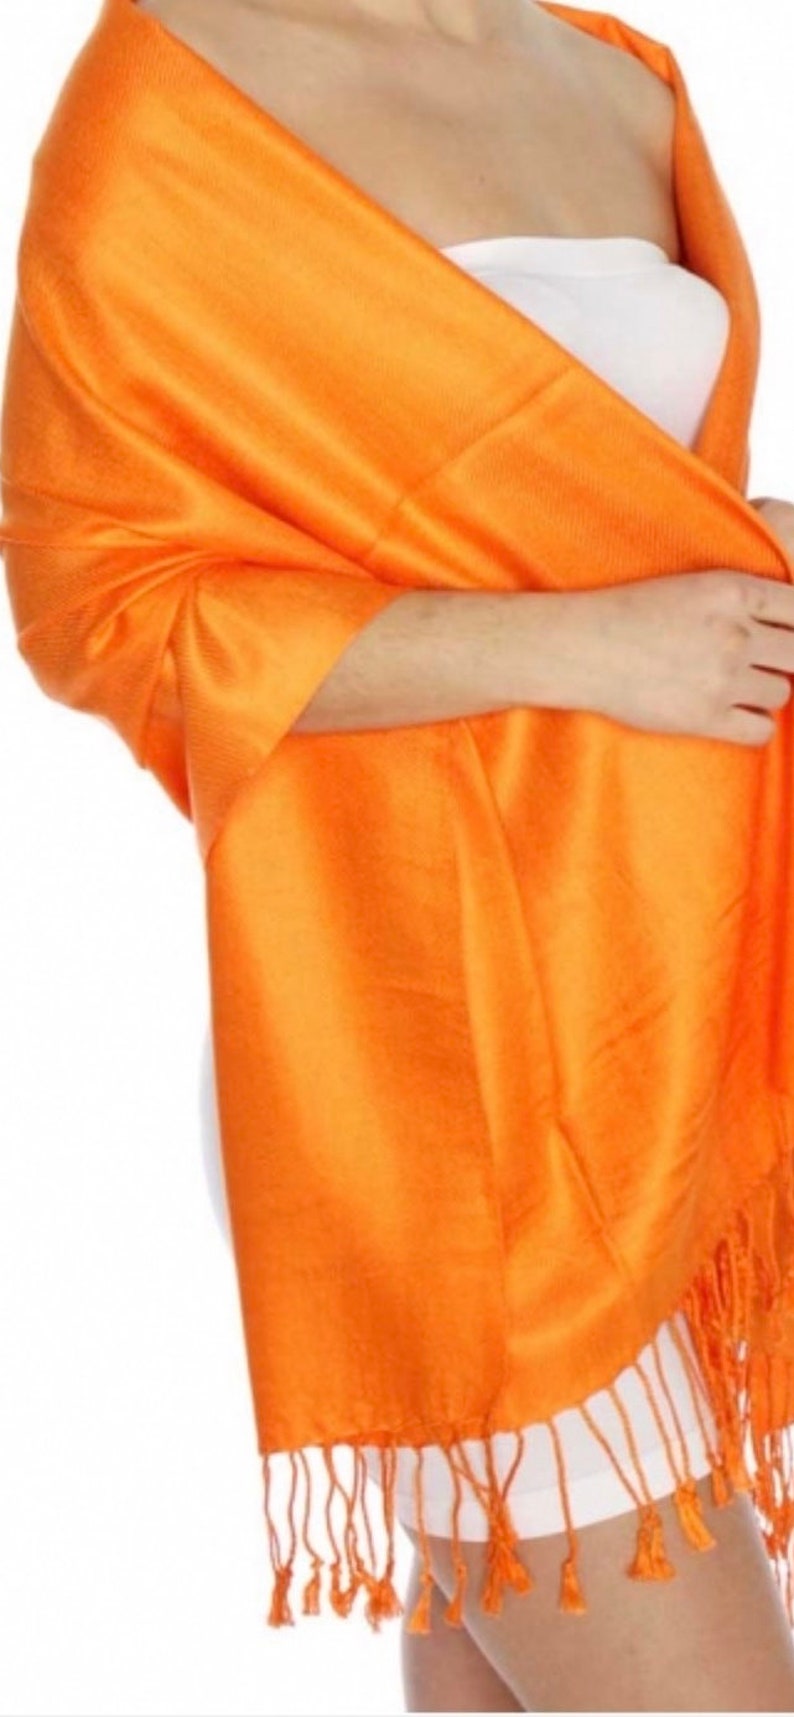 Orange Pashmina Orange scarf Orange cover ups Orange wedding pashmina Orange bridal favors Orange wedding favors Orange shawls image 2